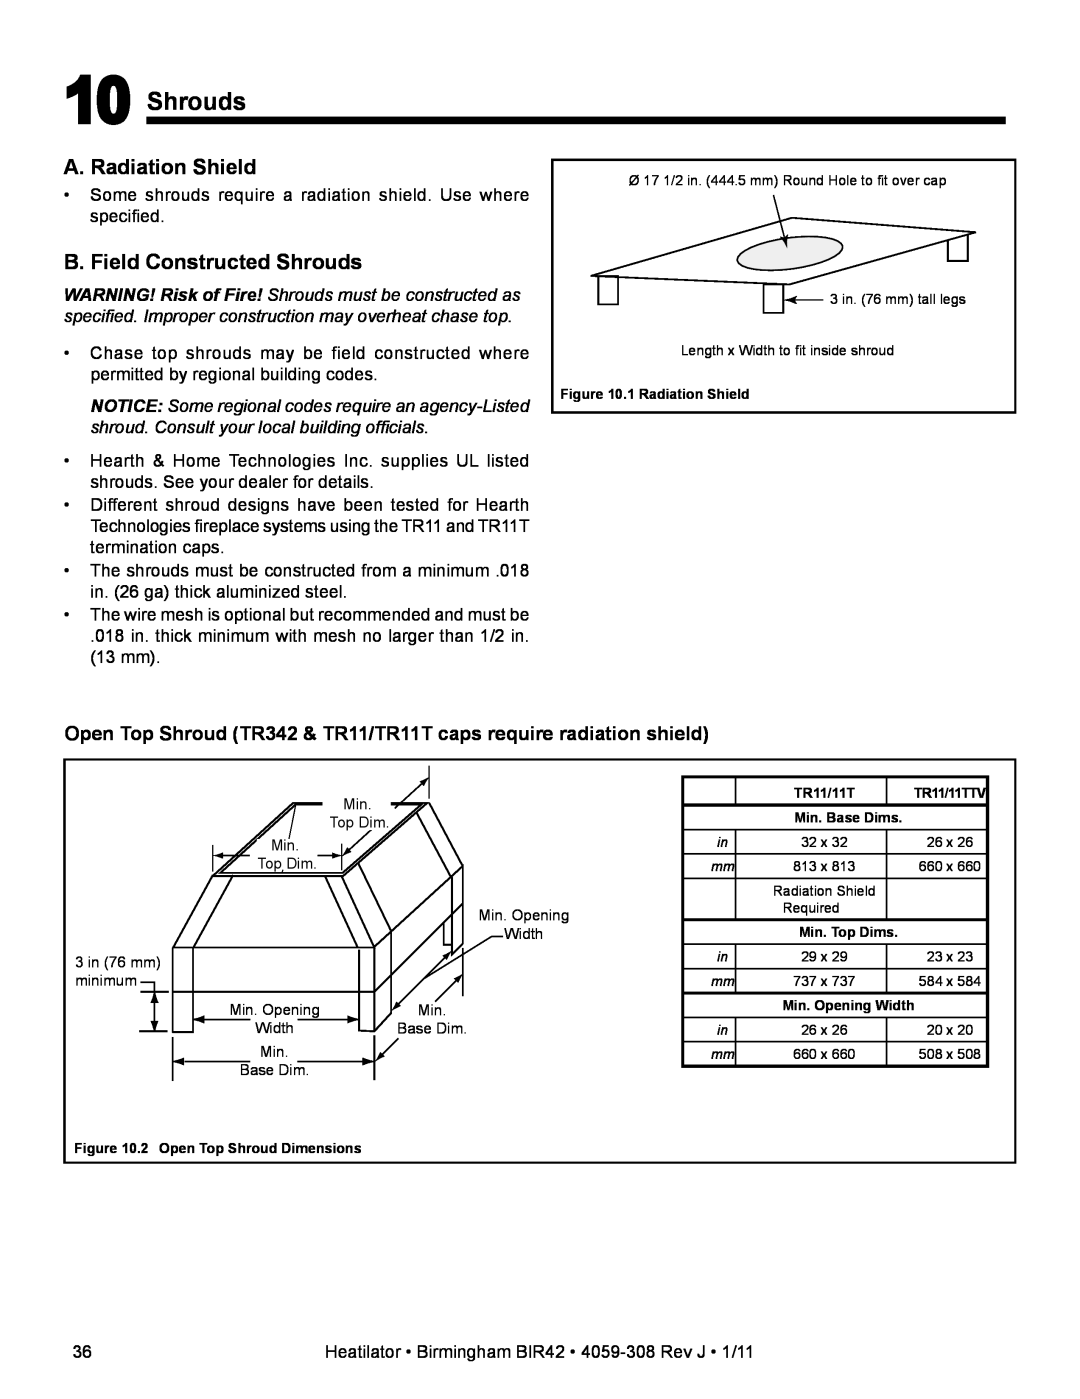 Heatiator BIR42 owner manual A. Radiation Shield, B. Field Constructed Shrouds 